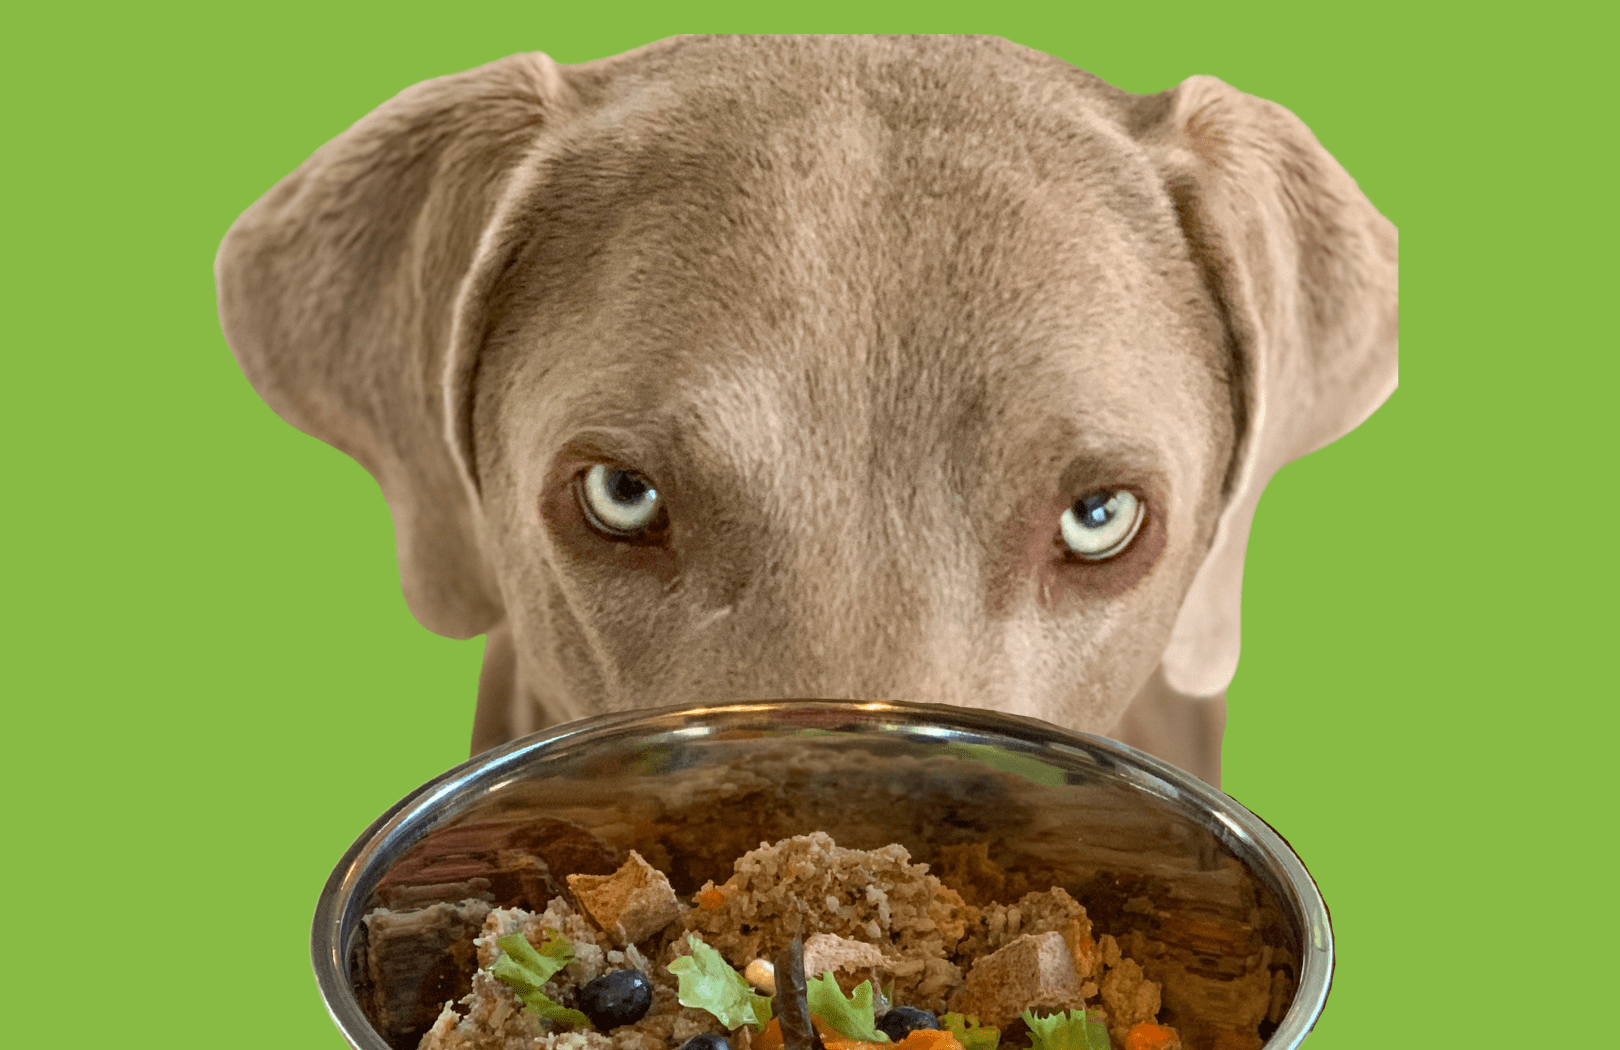 How Much Food Should I Feed My Dog?